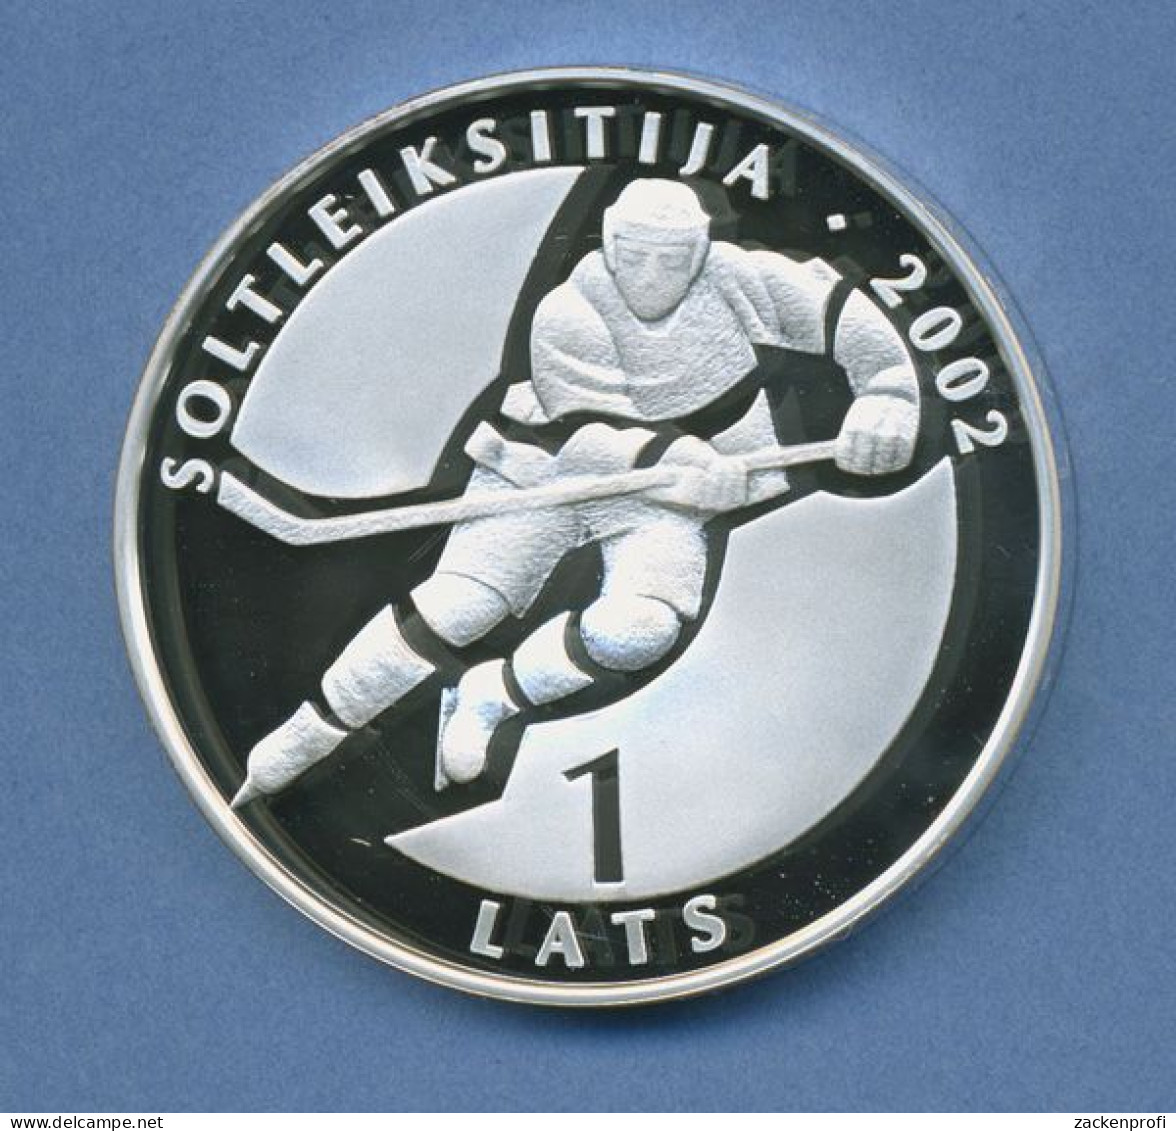 Lettland 1 Lats 2001, Silber, Eishockey, KM 50 PP (m4227) - Letland